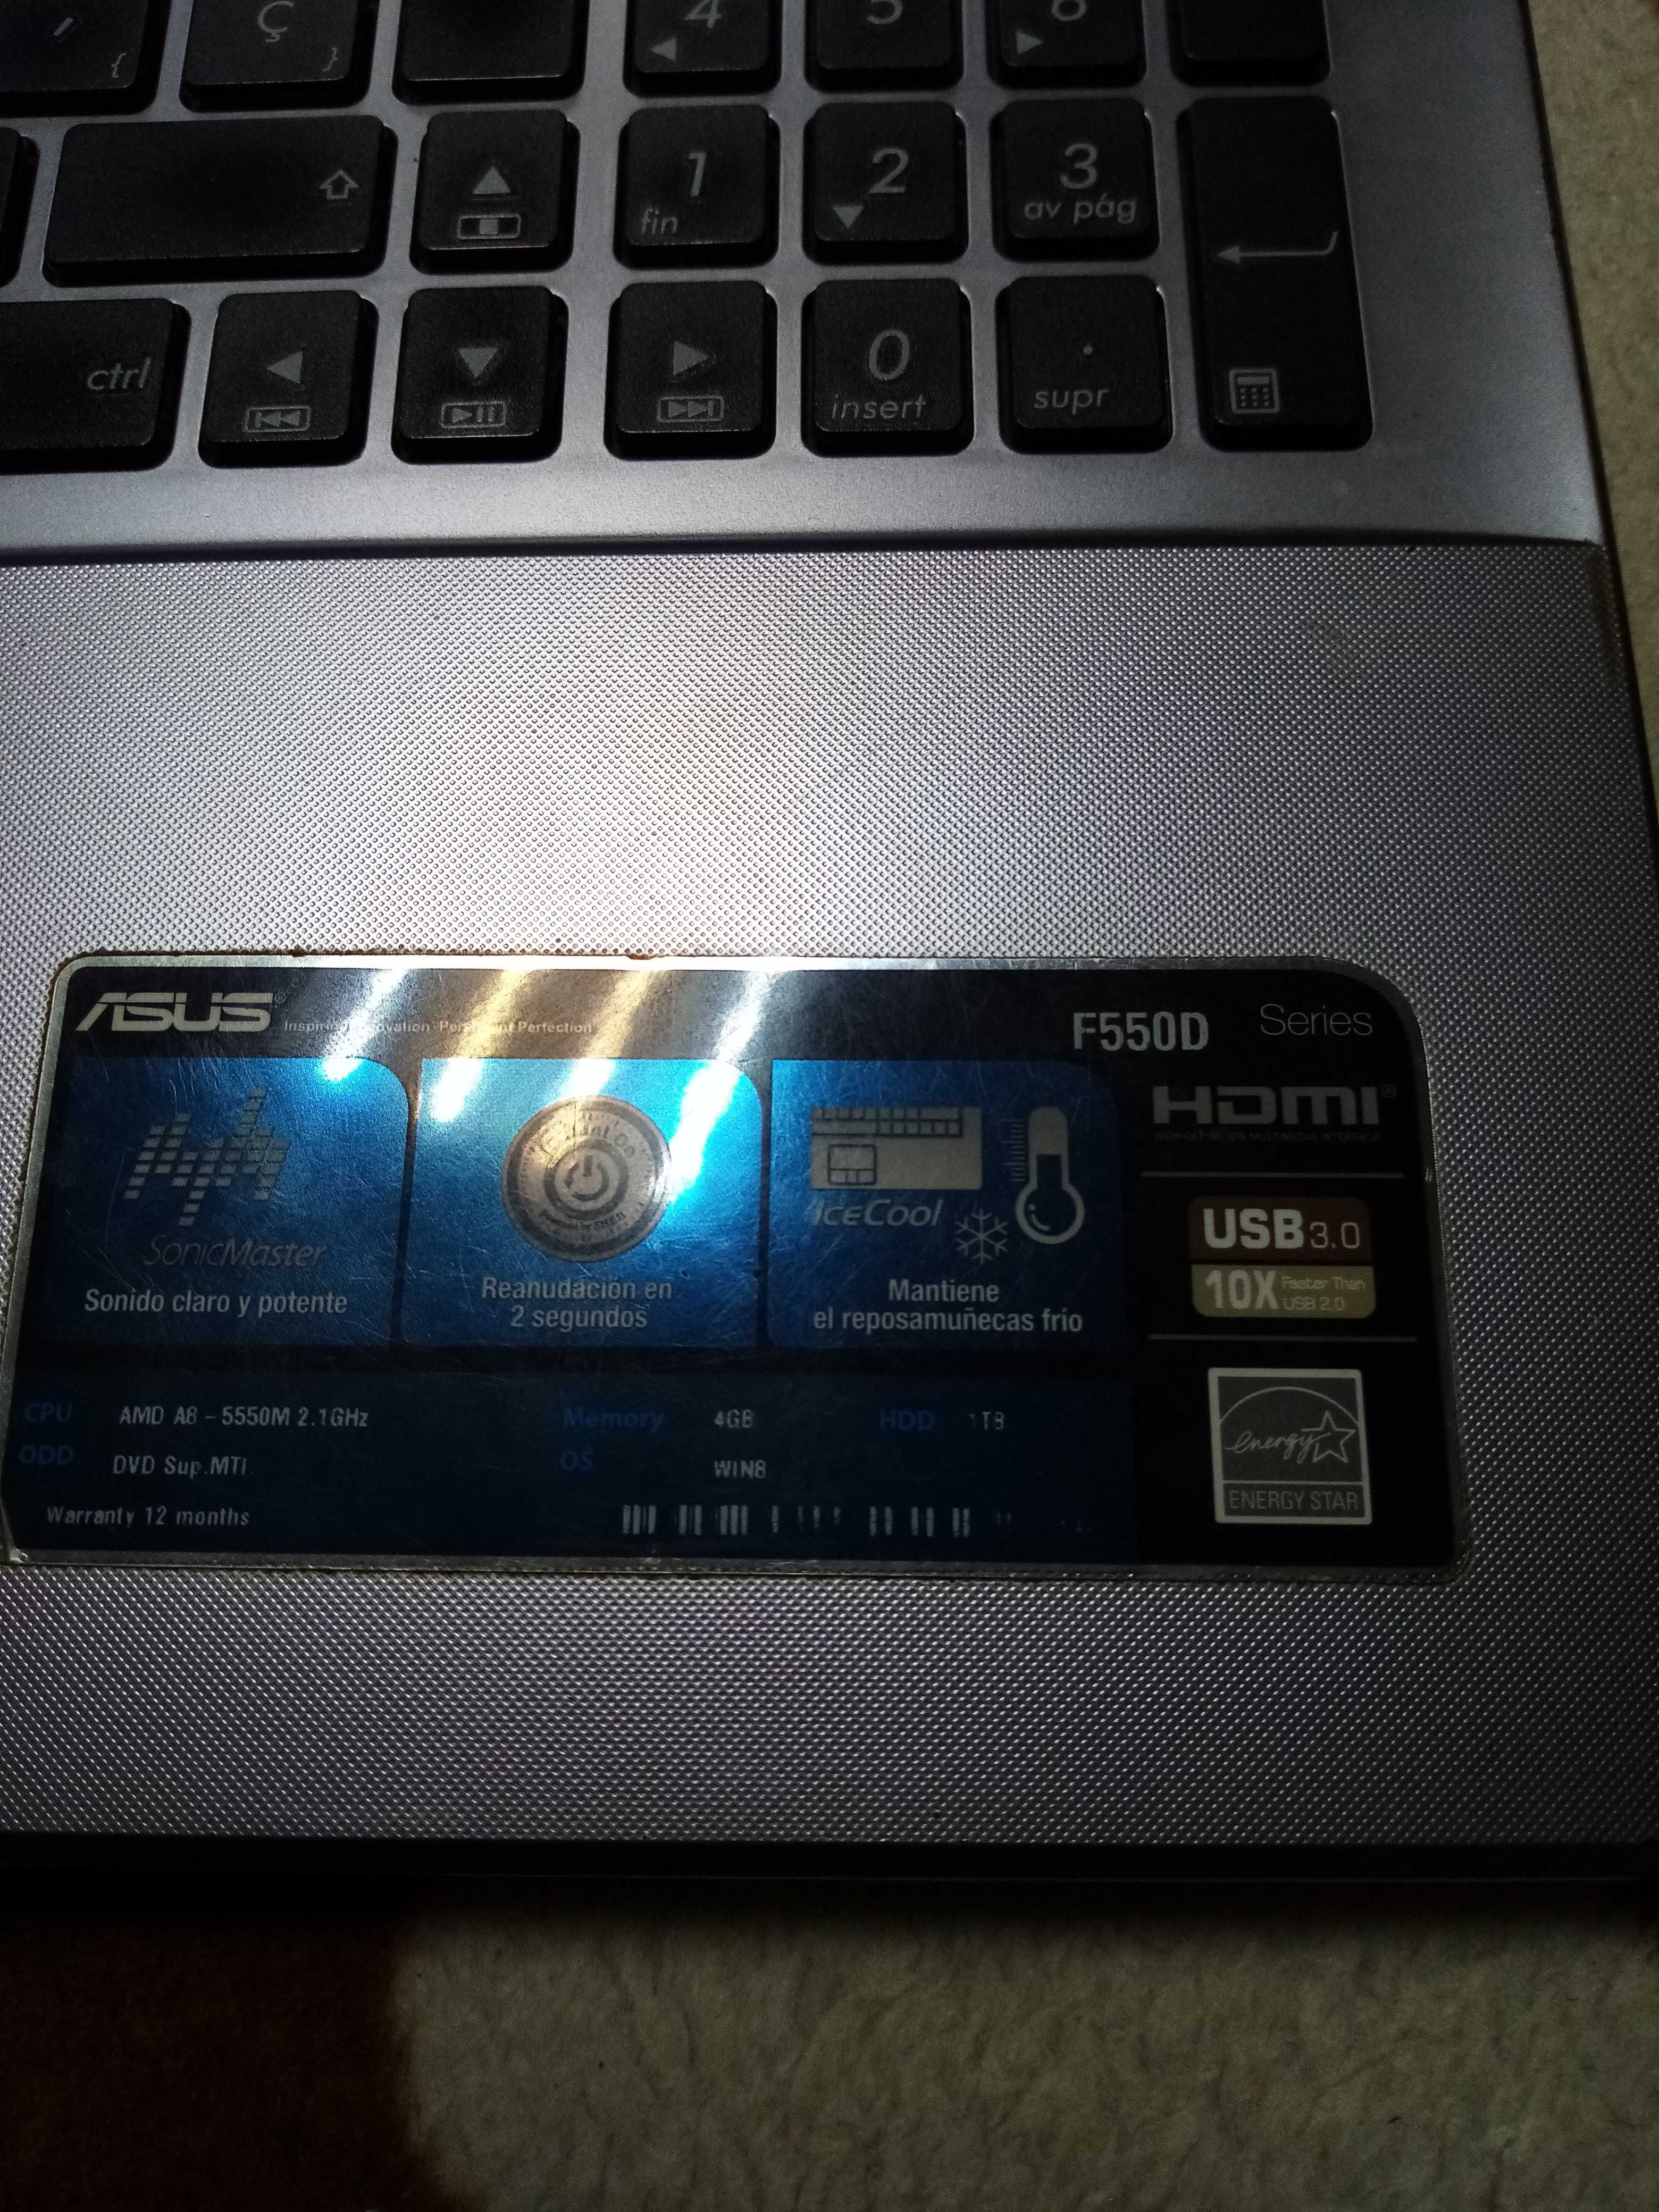 Laptop Asus F550d amd a8-5550m 8gb ram  dual graphics HD 8670m hdd 1tb